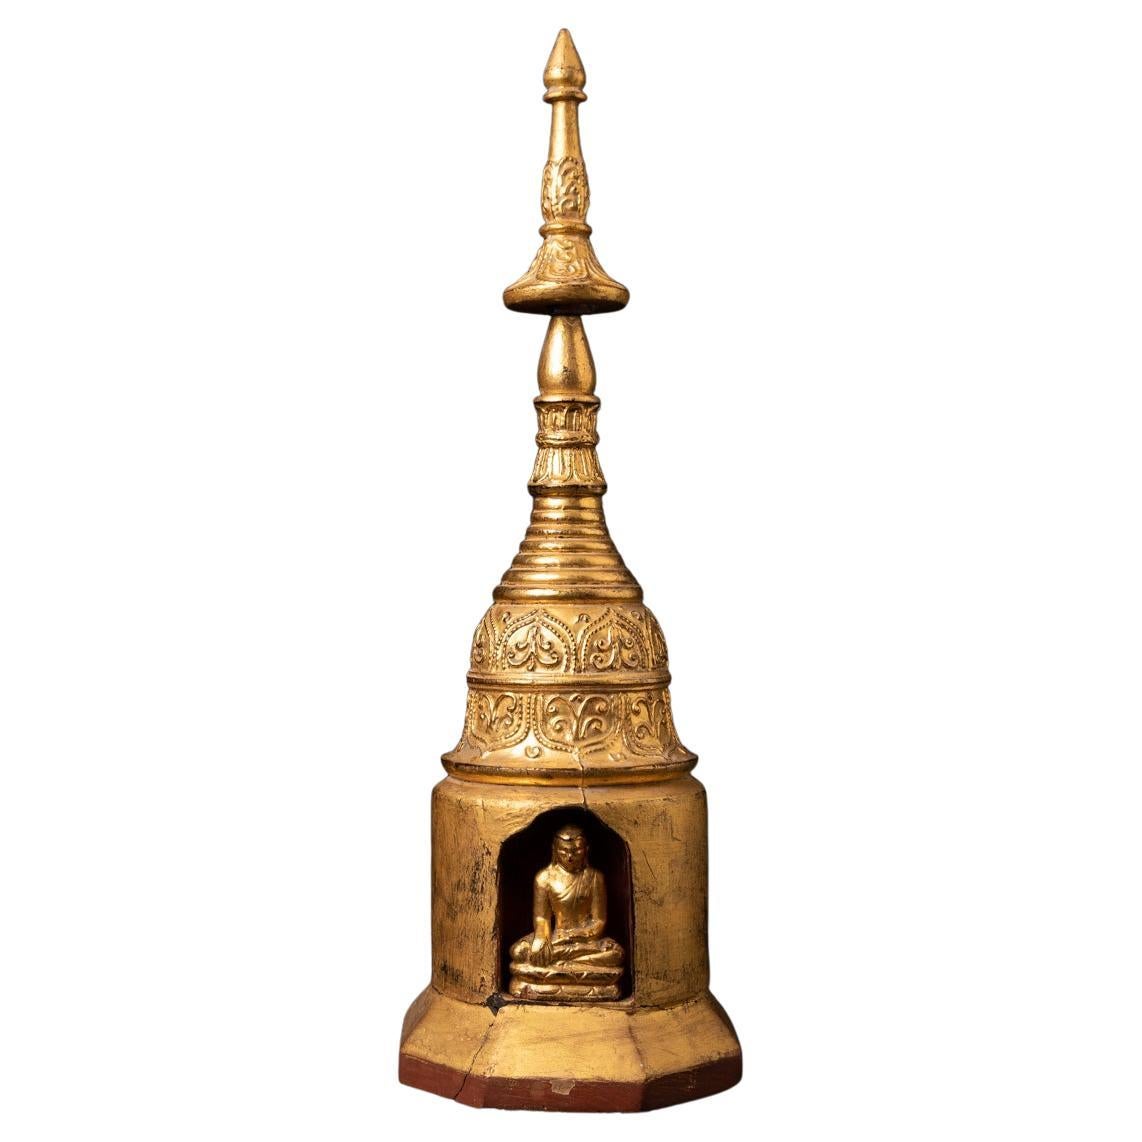 19th century antique wooden stupa with Buddha inside in Bhumisparsha Mudra